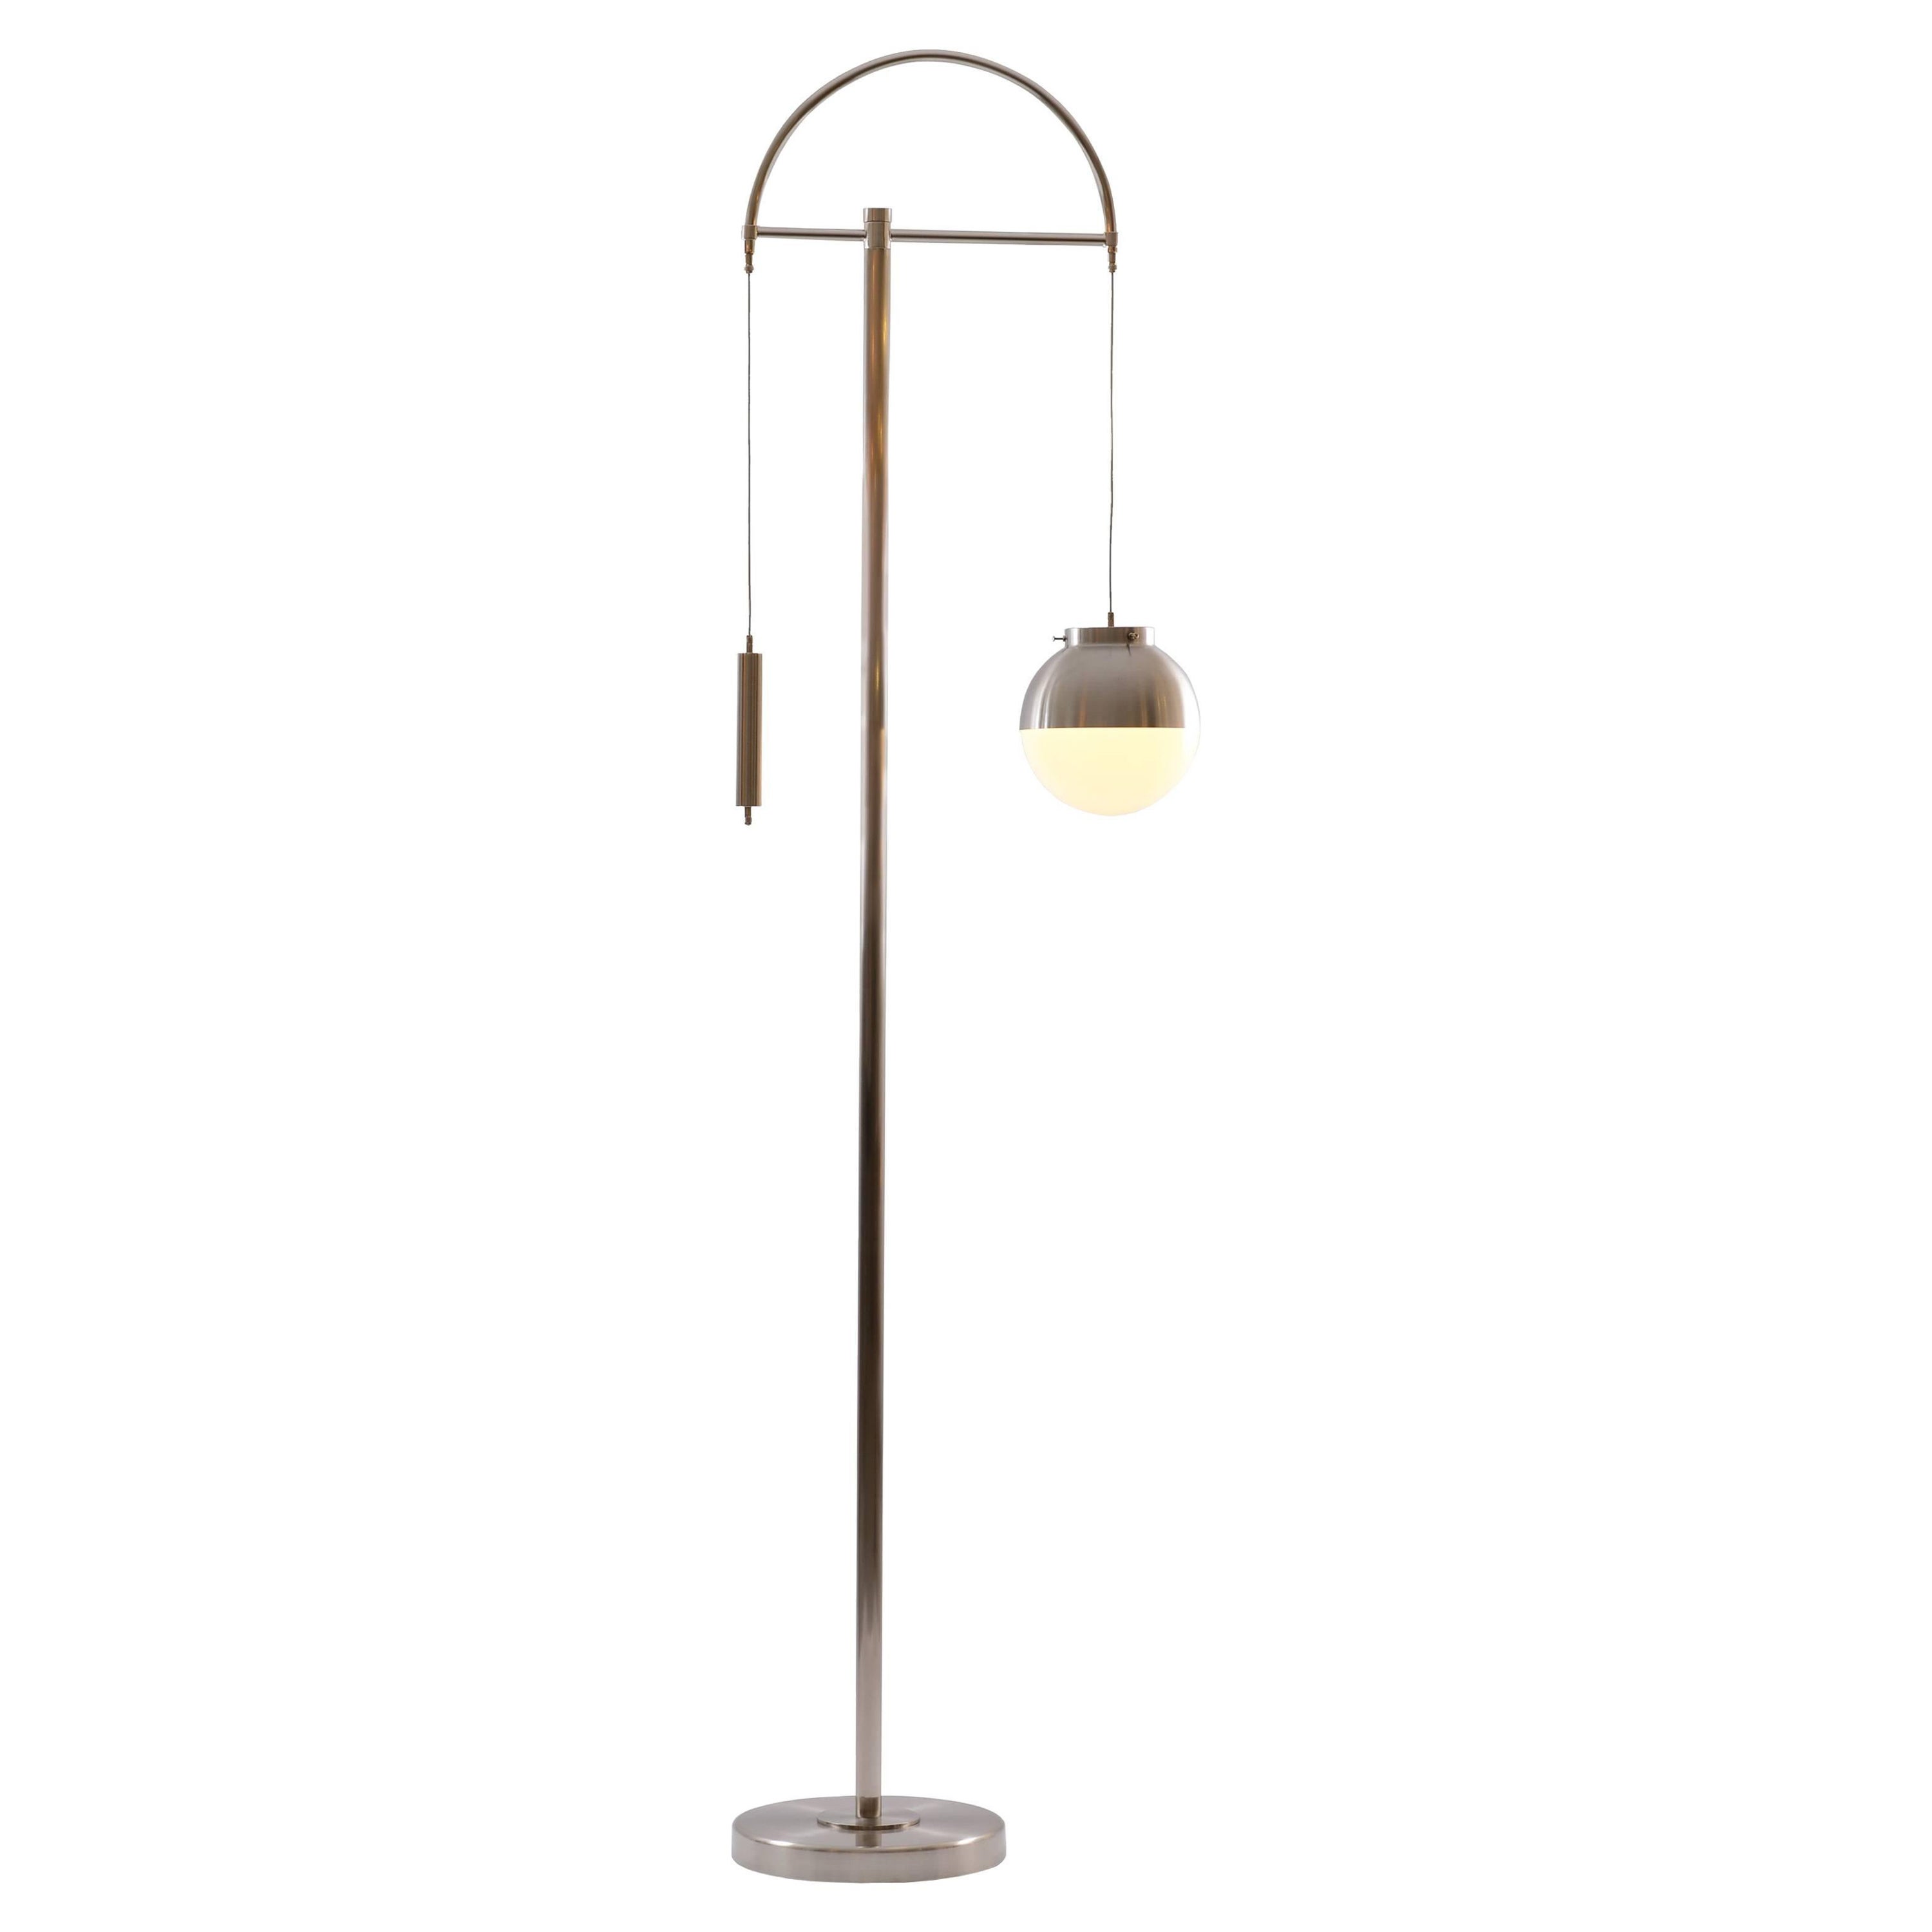 Art Deco, Art Nouveau Lift Floor Lamp Adjustable in Height, Re Edition